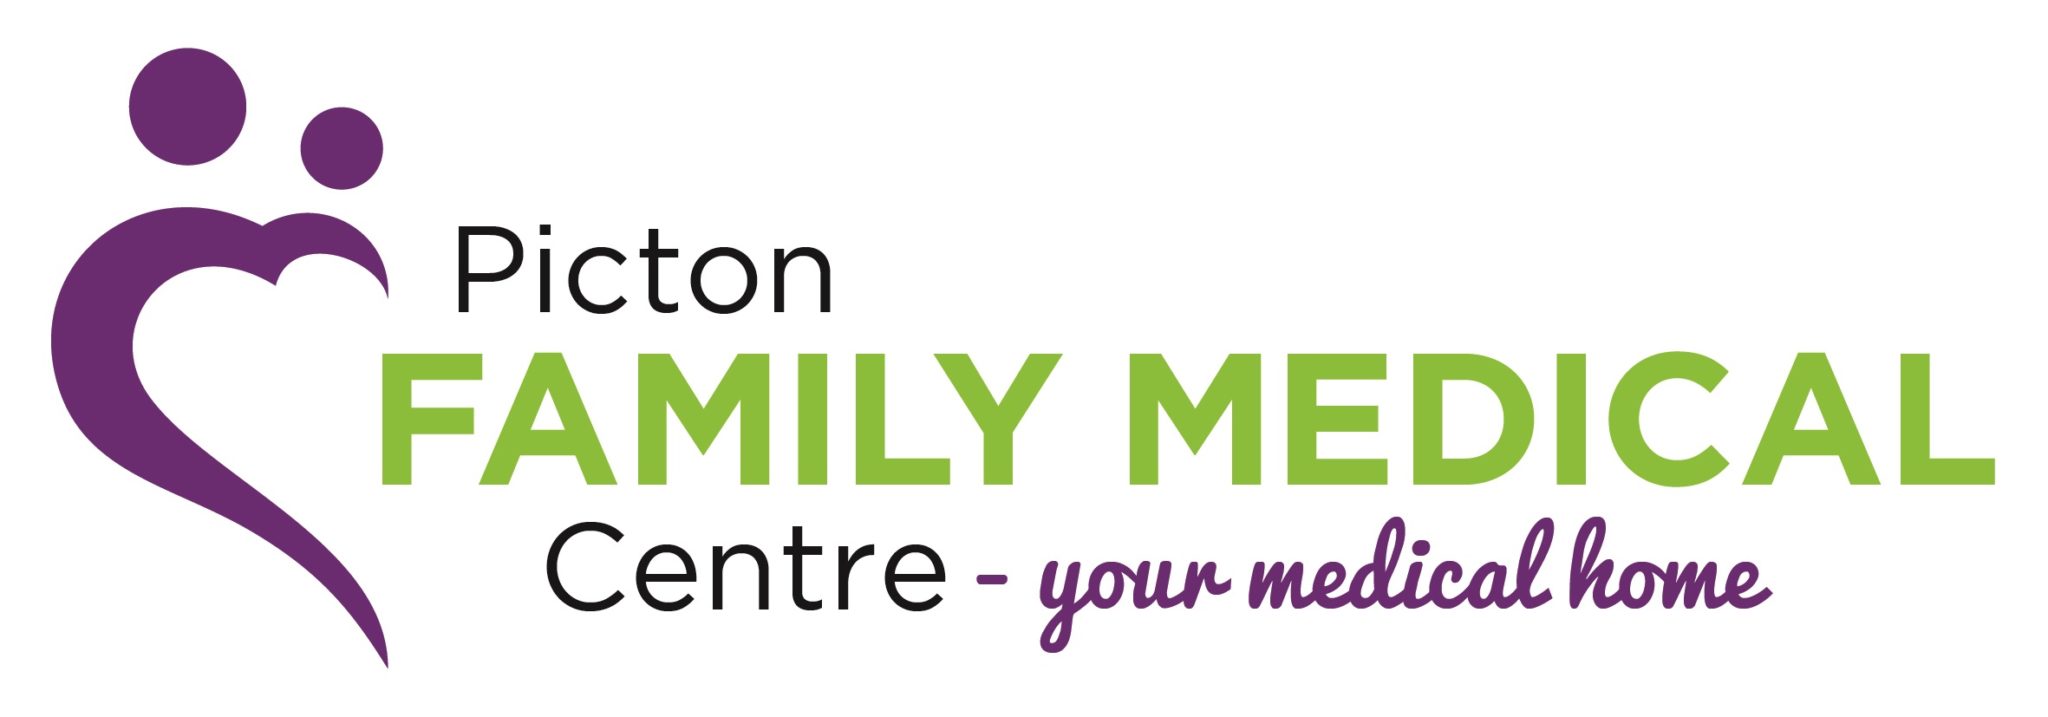 Picton Family Medical Centre 